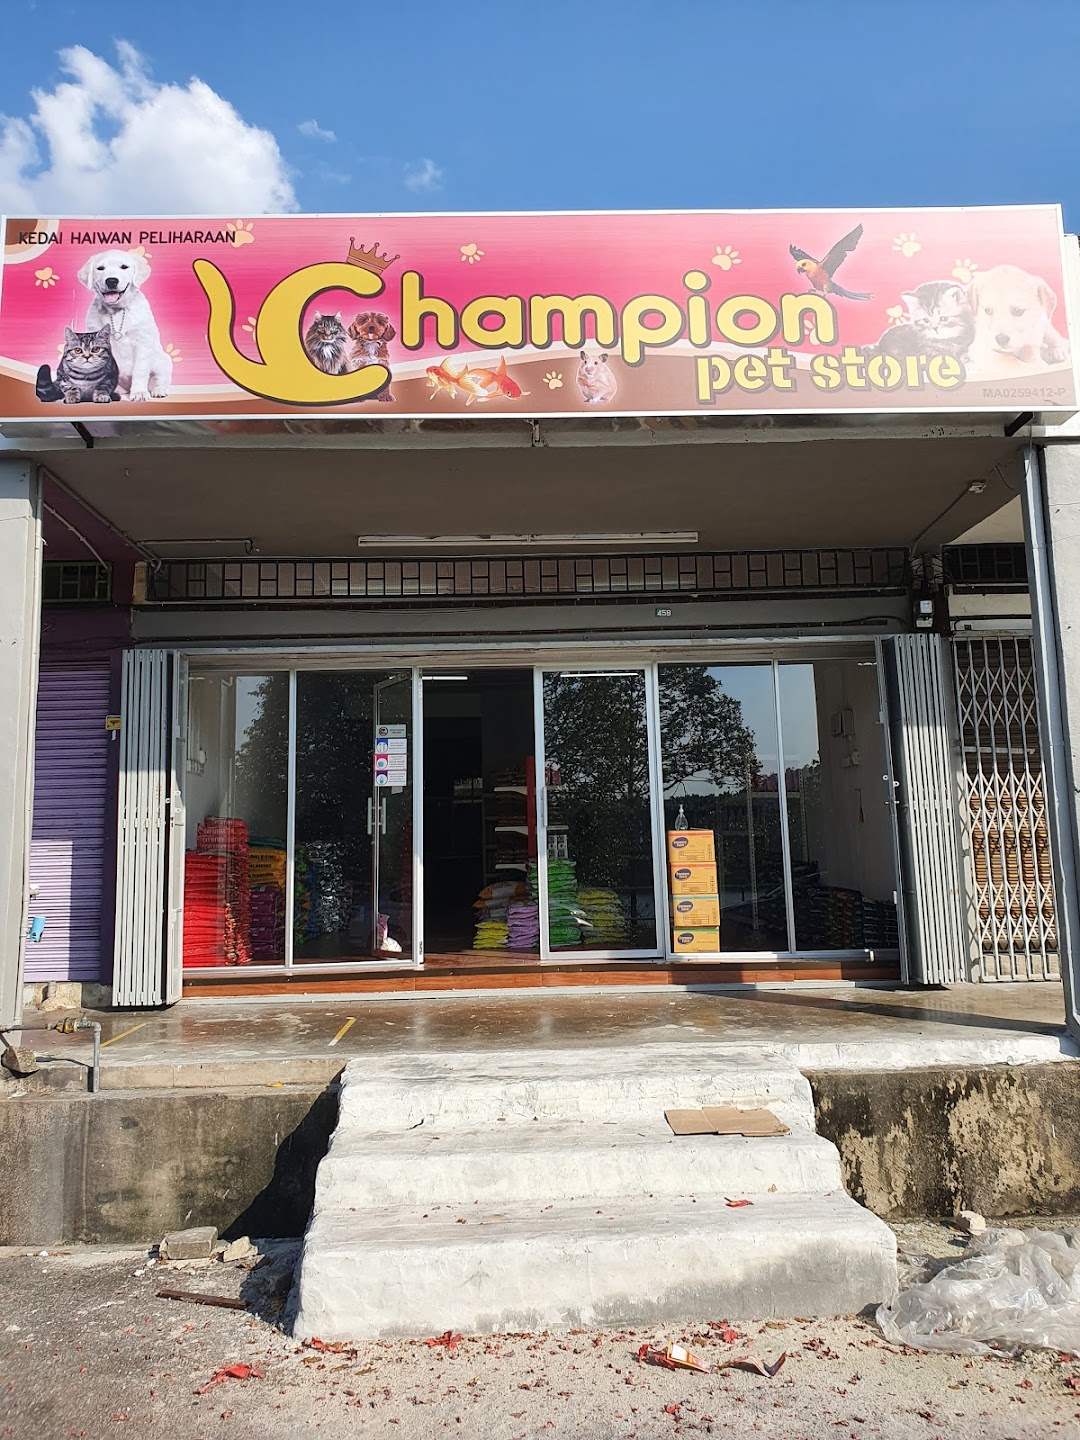 Champion pet store